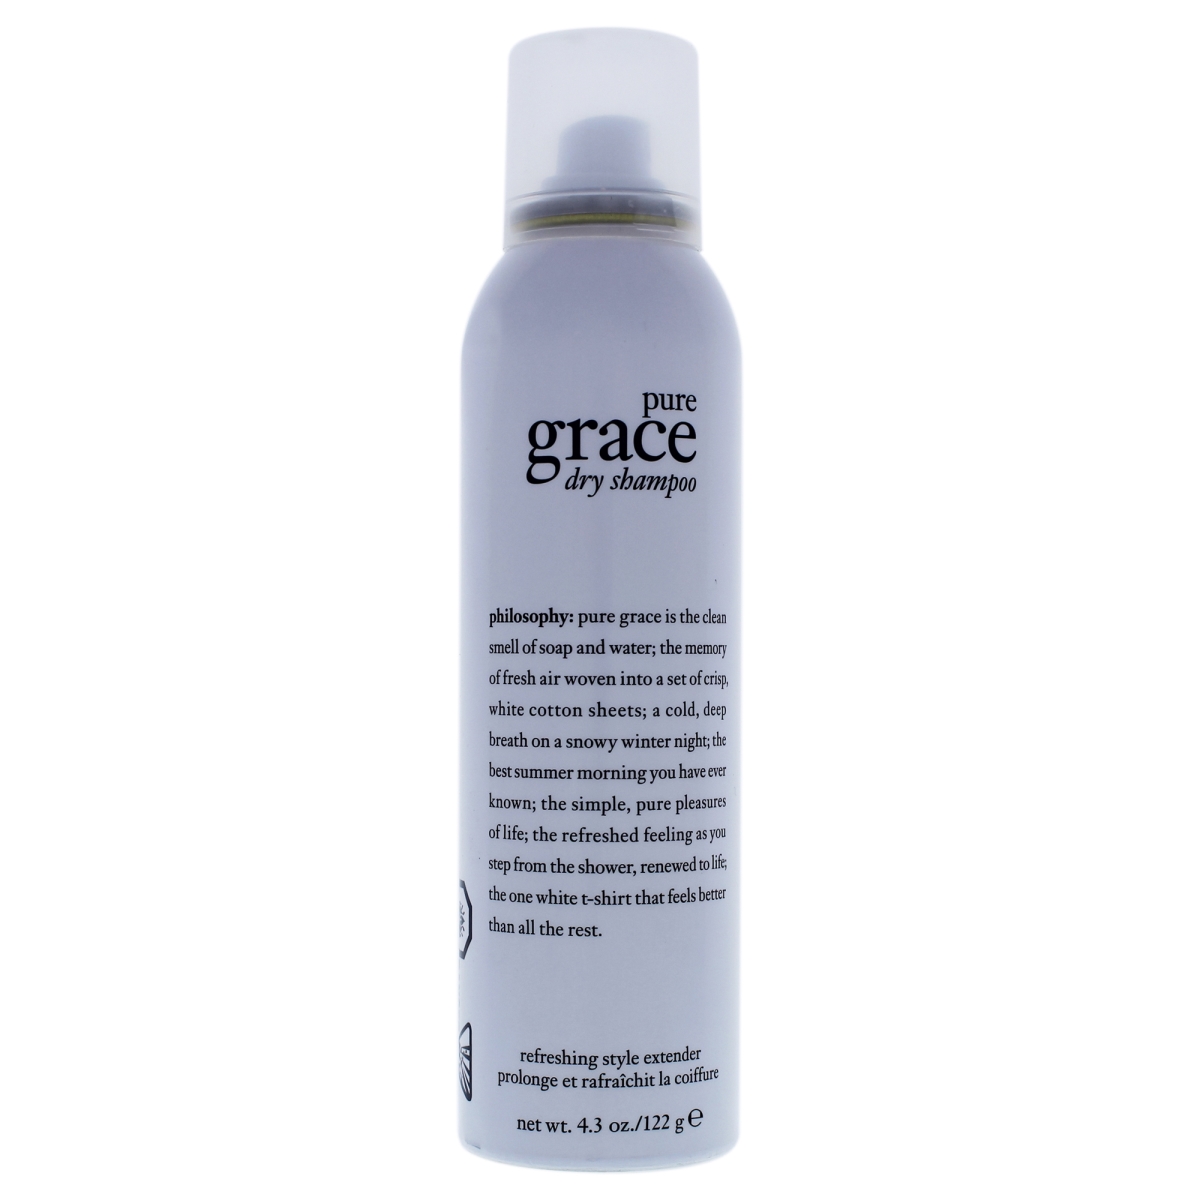 I0091989 Pure Grace Dry Shampoo For Unisex - 4.3 Oz